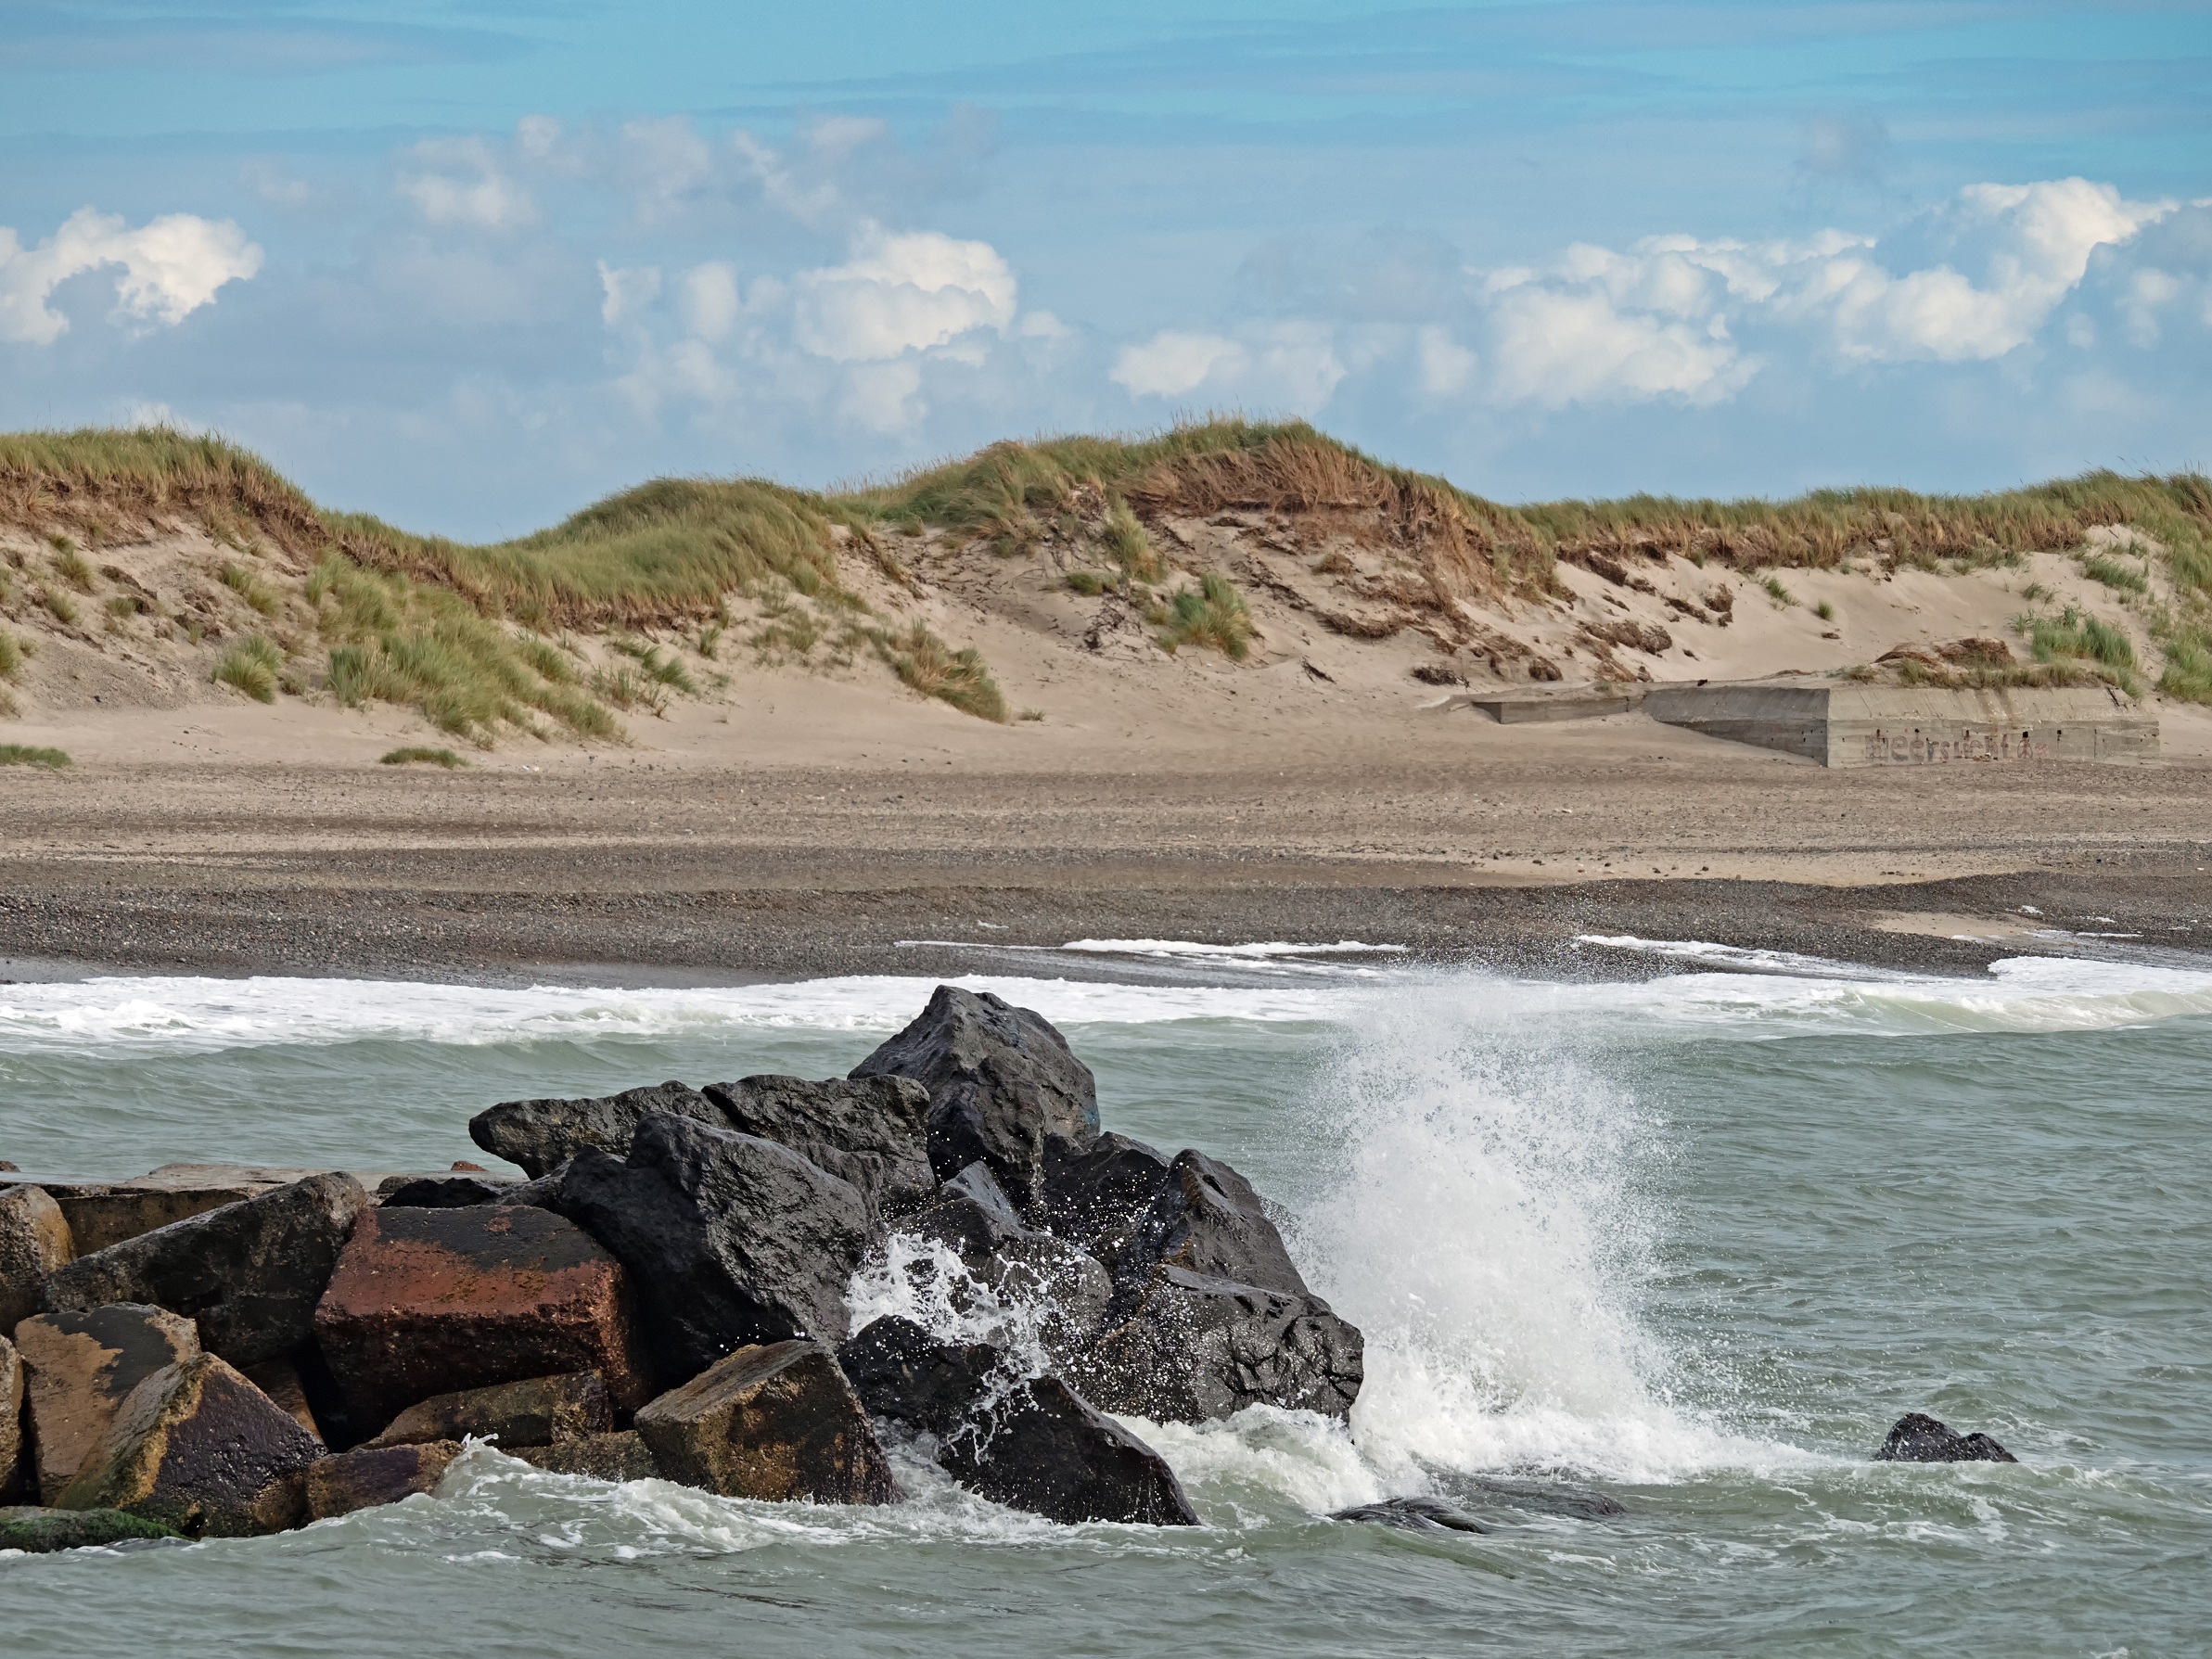 Nordseeküste bei Agger Tange Strand im Nationalpark Thy, Dänemark